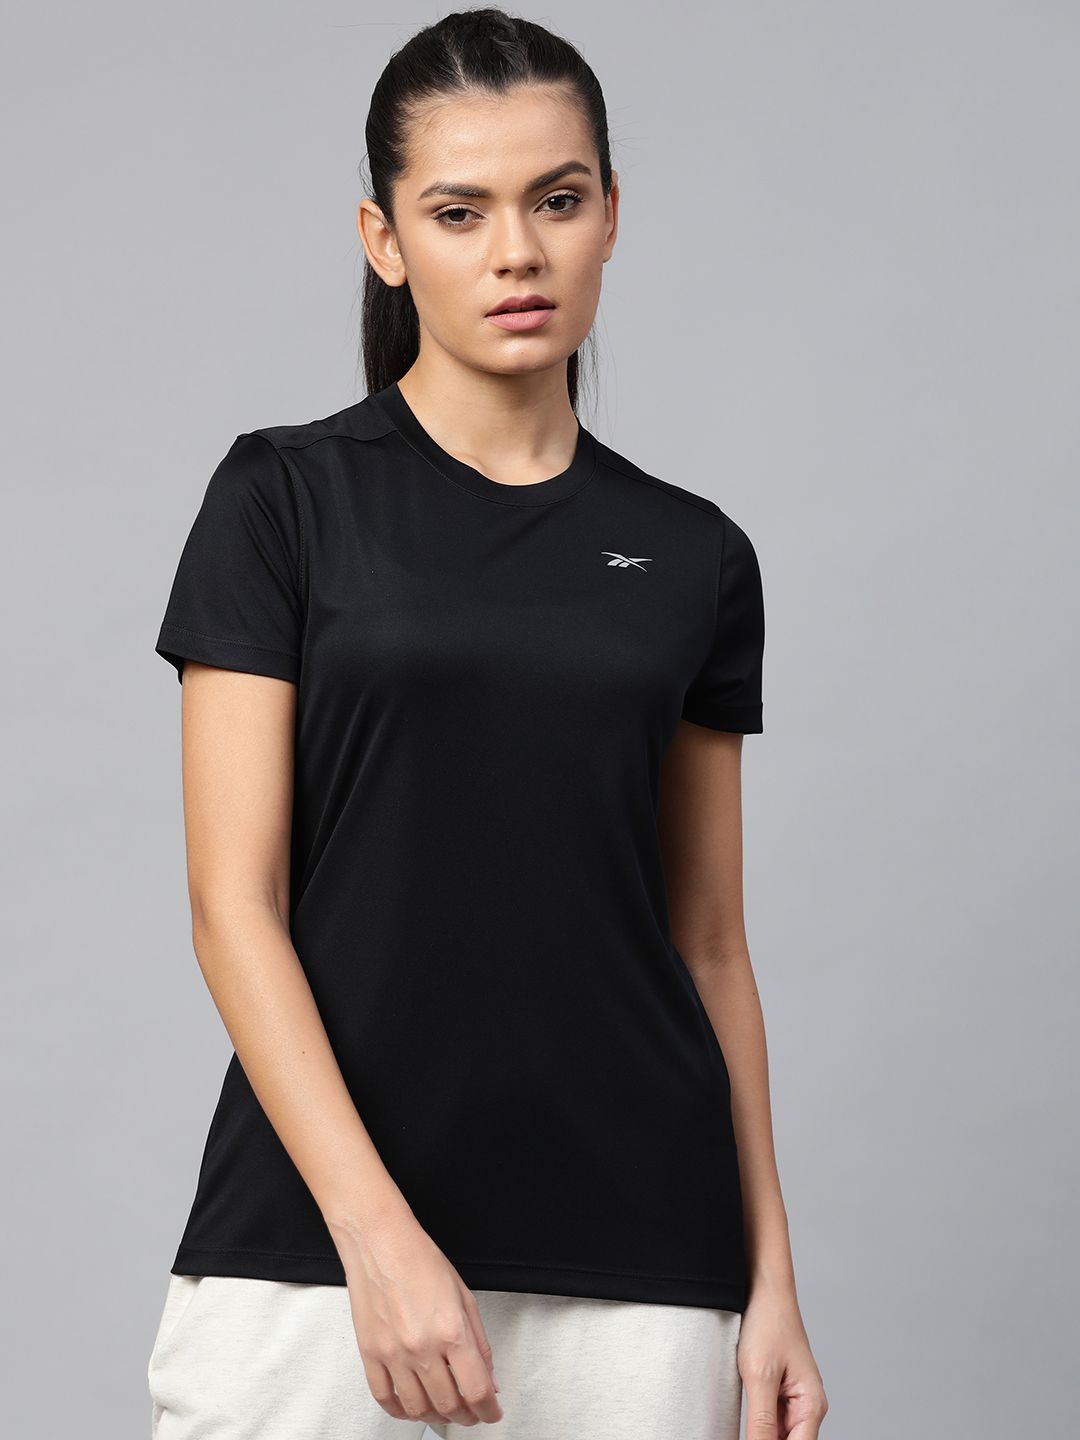 Reebok Women Black Basic Solid Slim Fit Running T-shirt Price in India